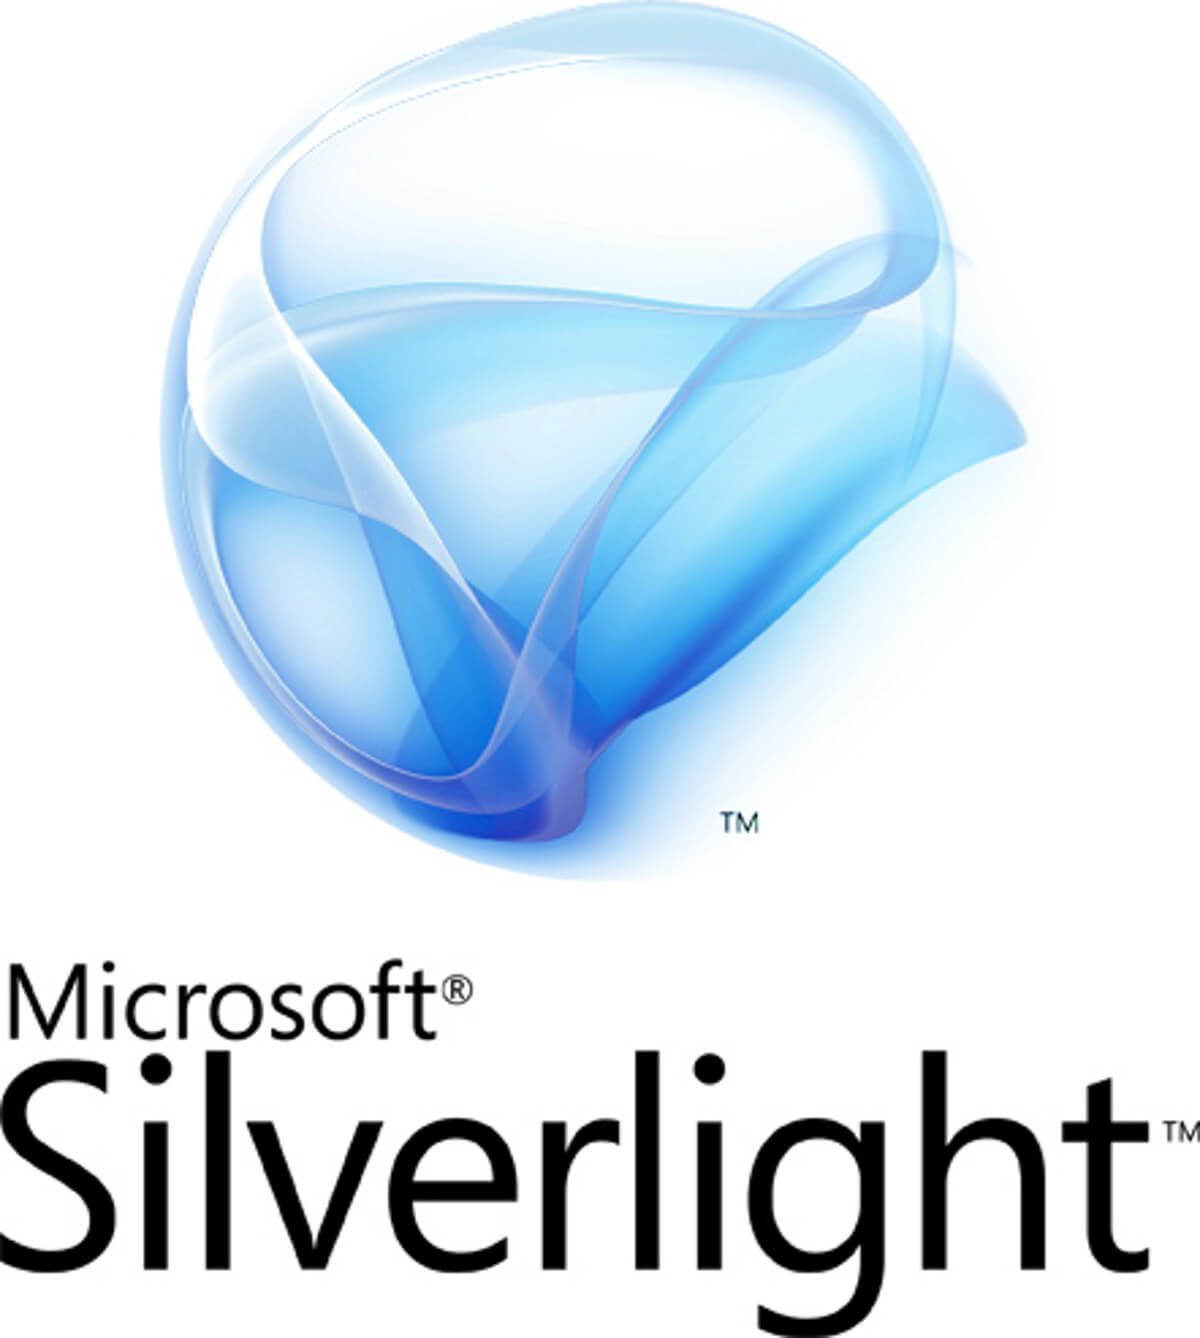 microsoft silverlight download for windows 10